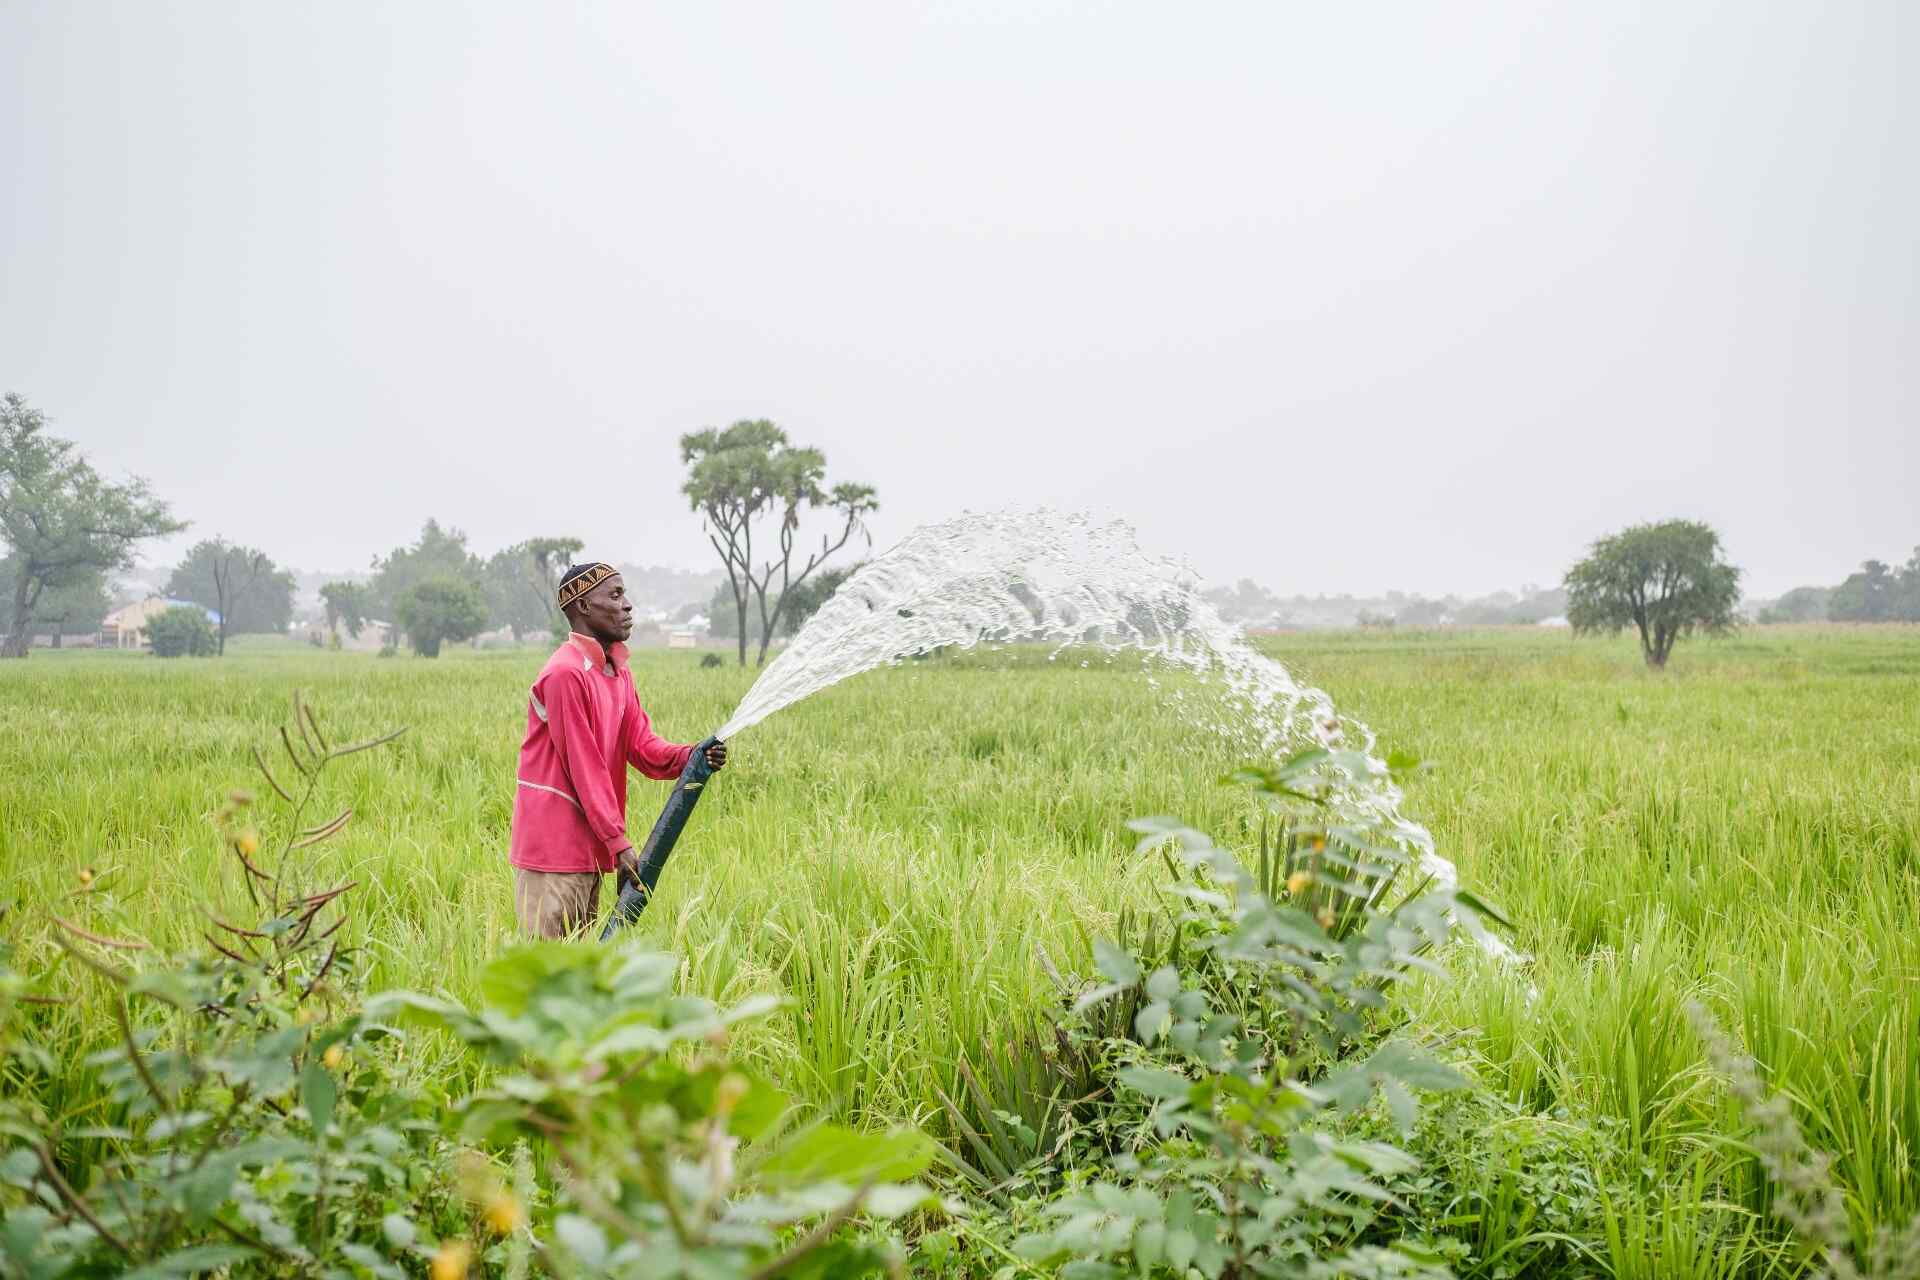 In Adamawa State, Nigeria, Salihu waters his lush crops with an irrigation hose.